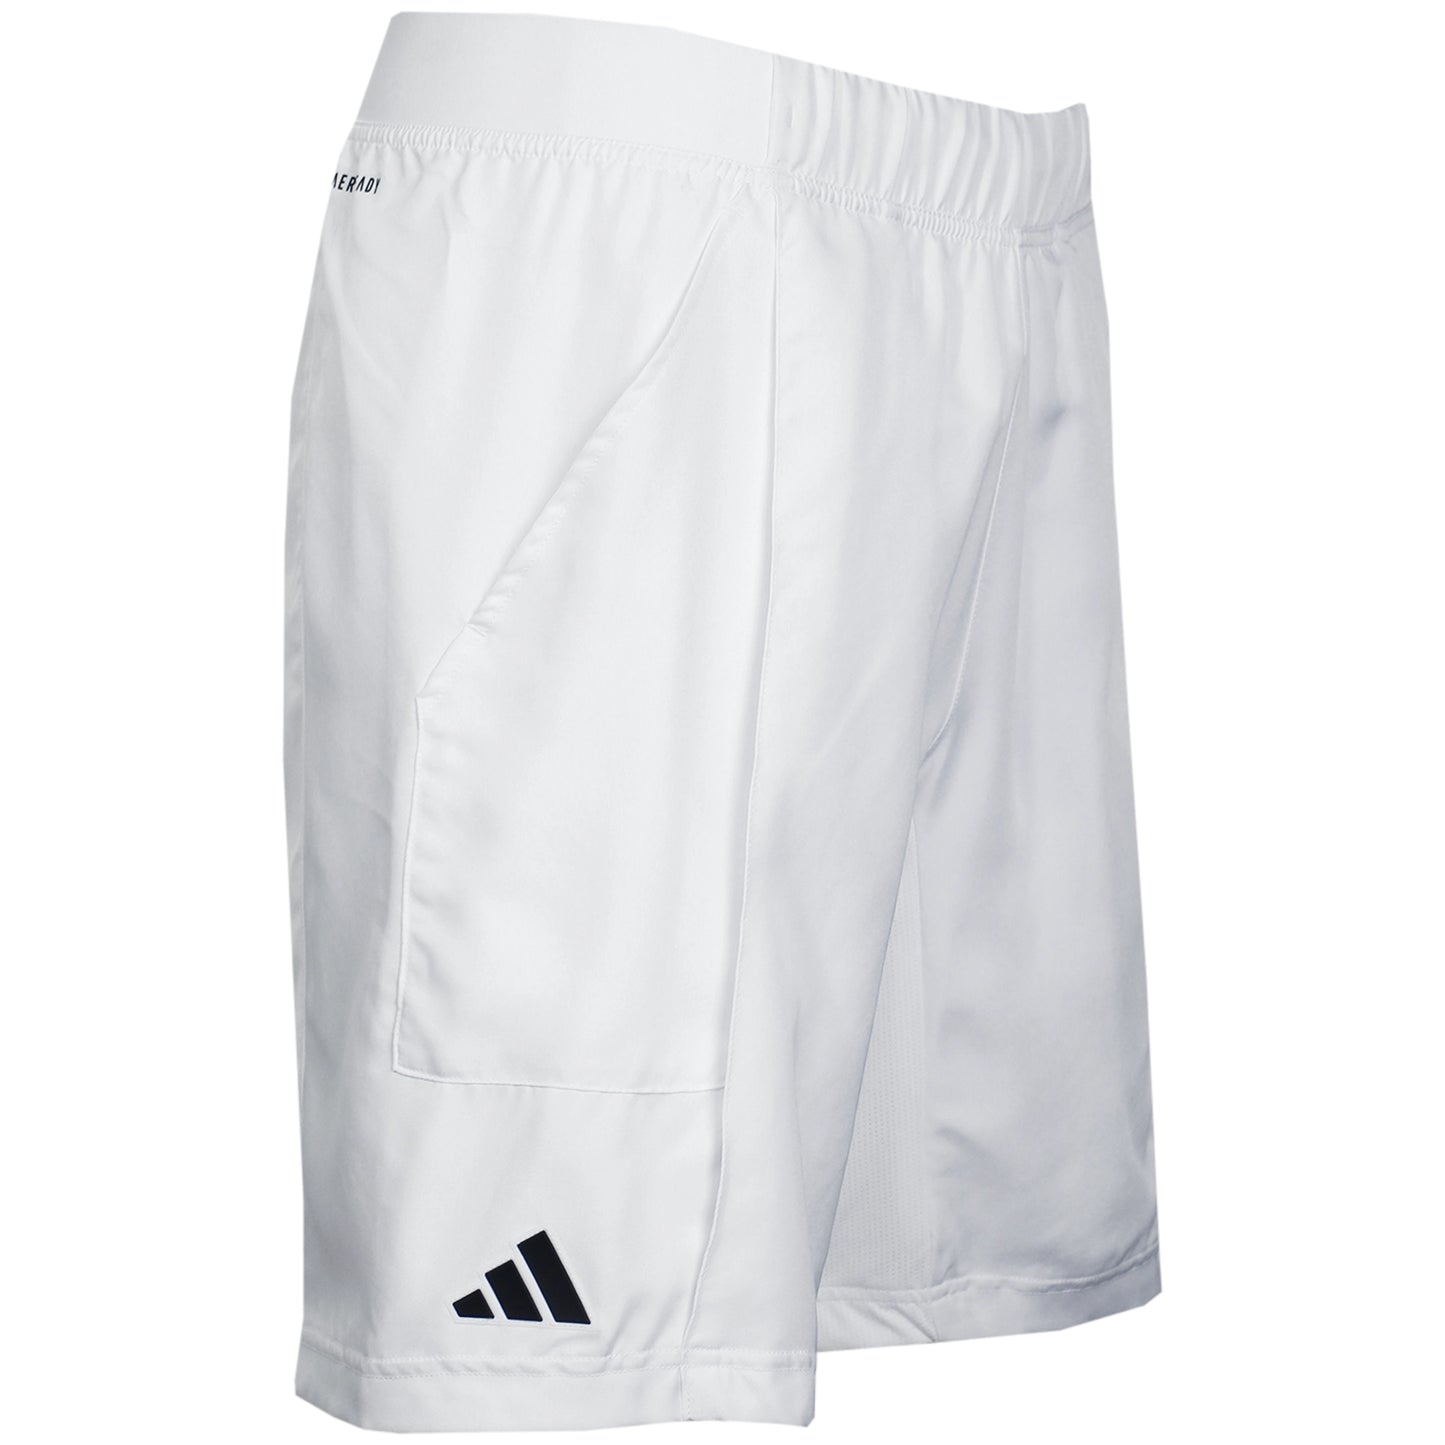 Adidas Men's Short Pro IA7097 White